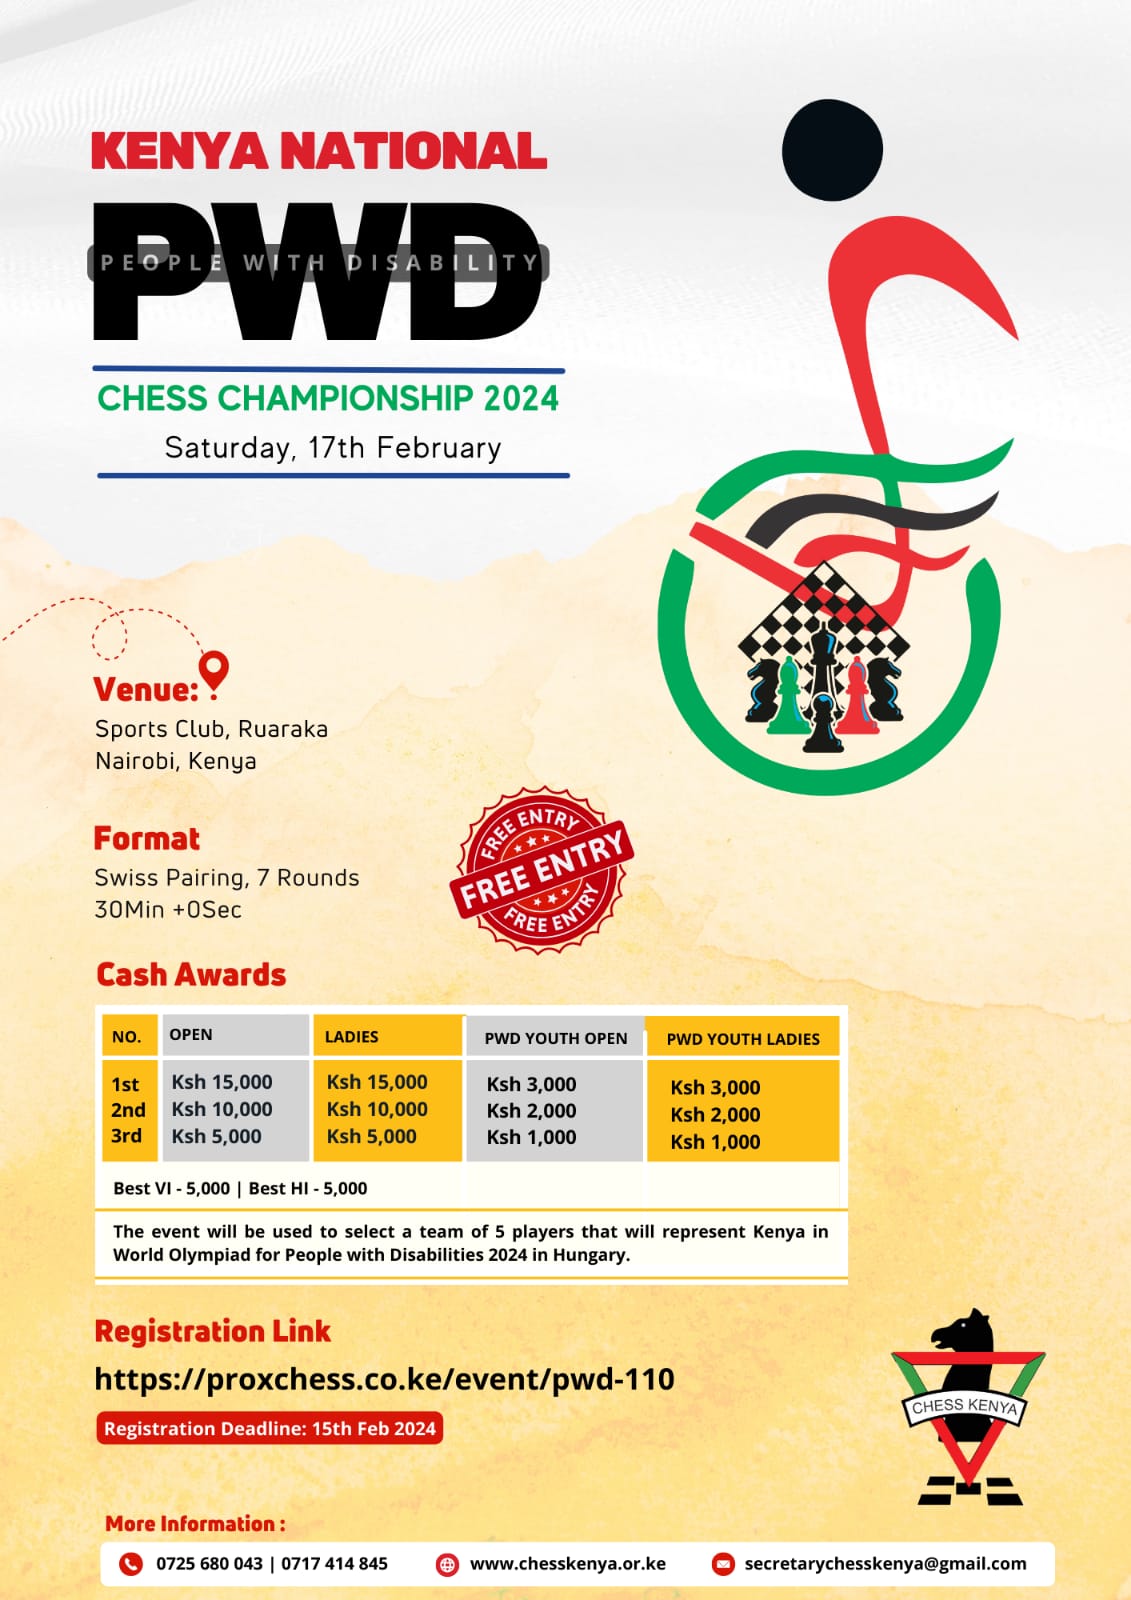 The 2024 Kenya National PWD Championship 